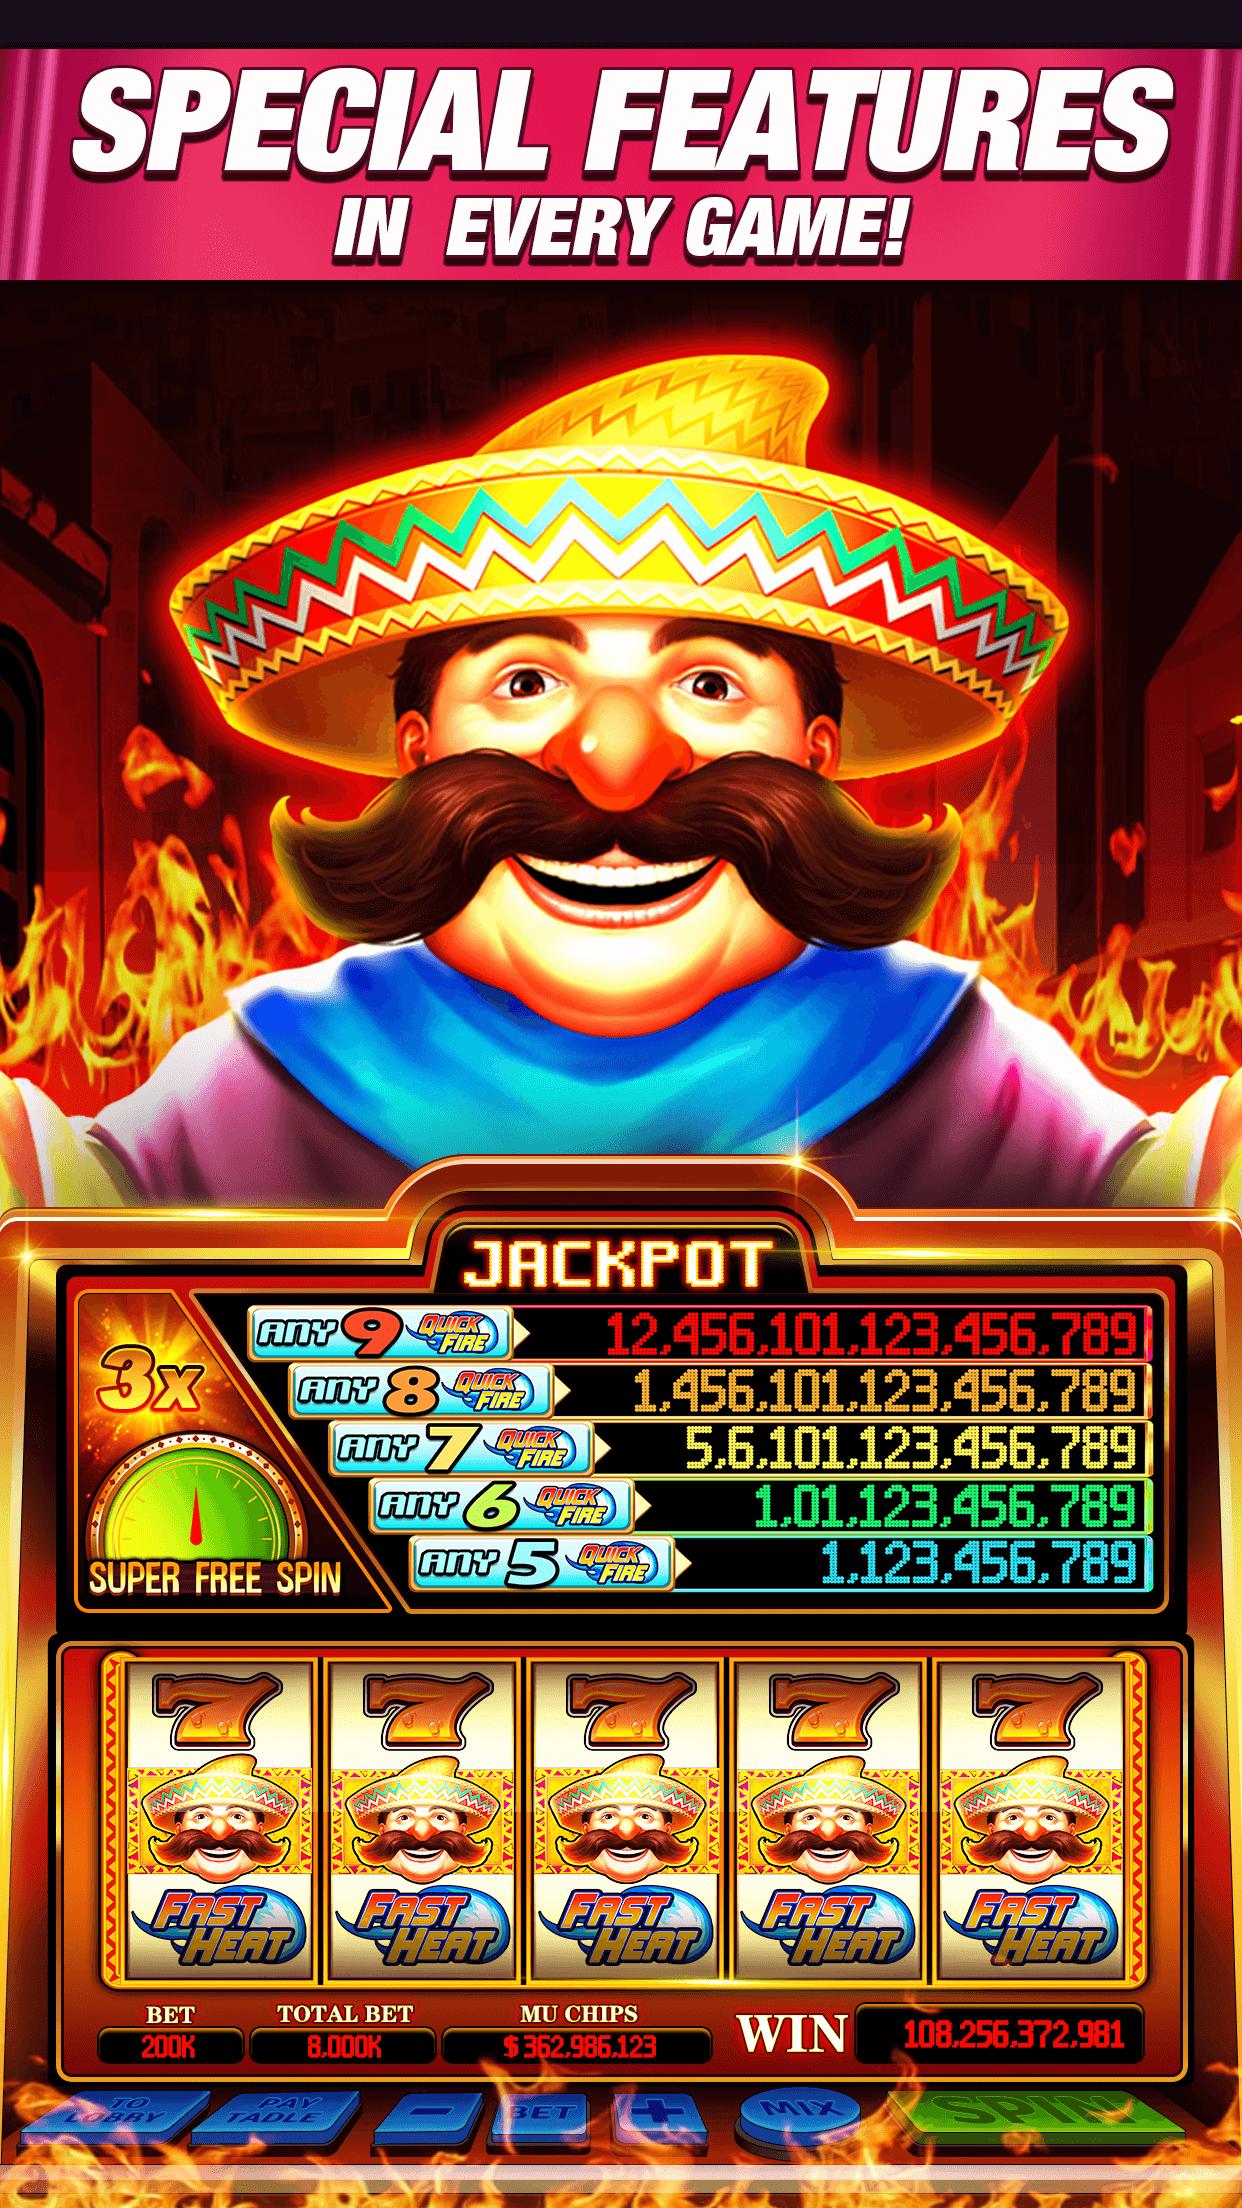 Slots casino jackpot mania download D'oro slots free spins no deposit